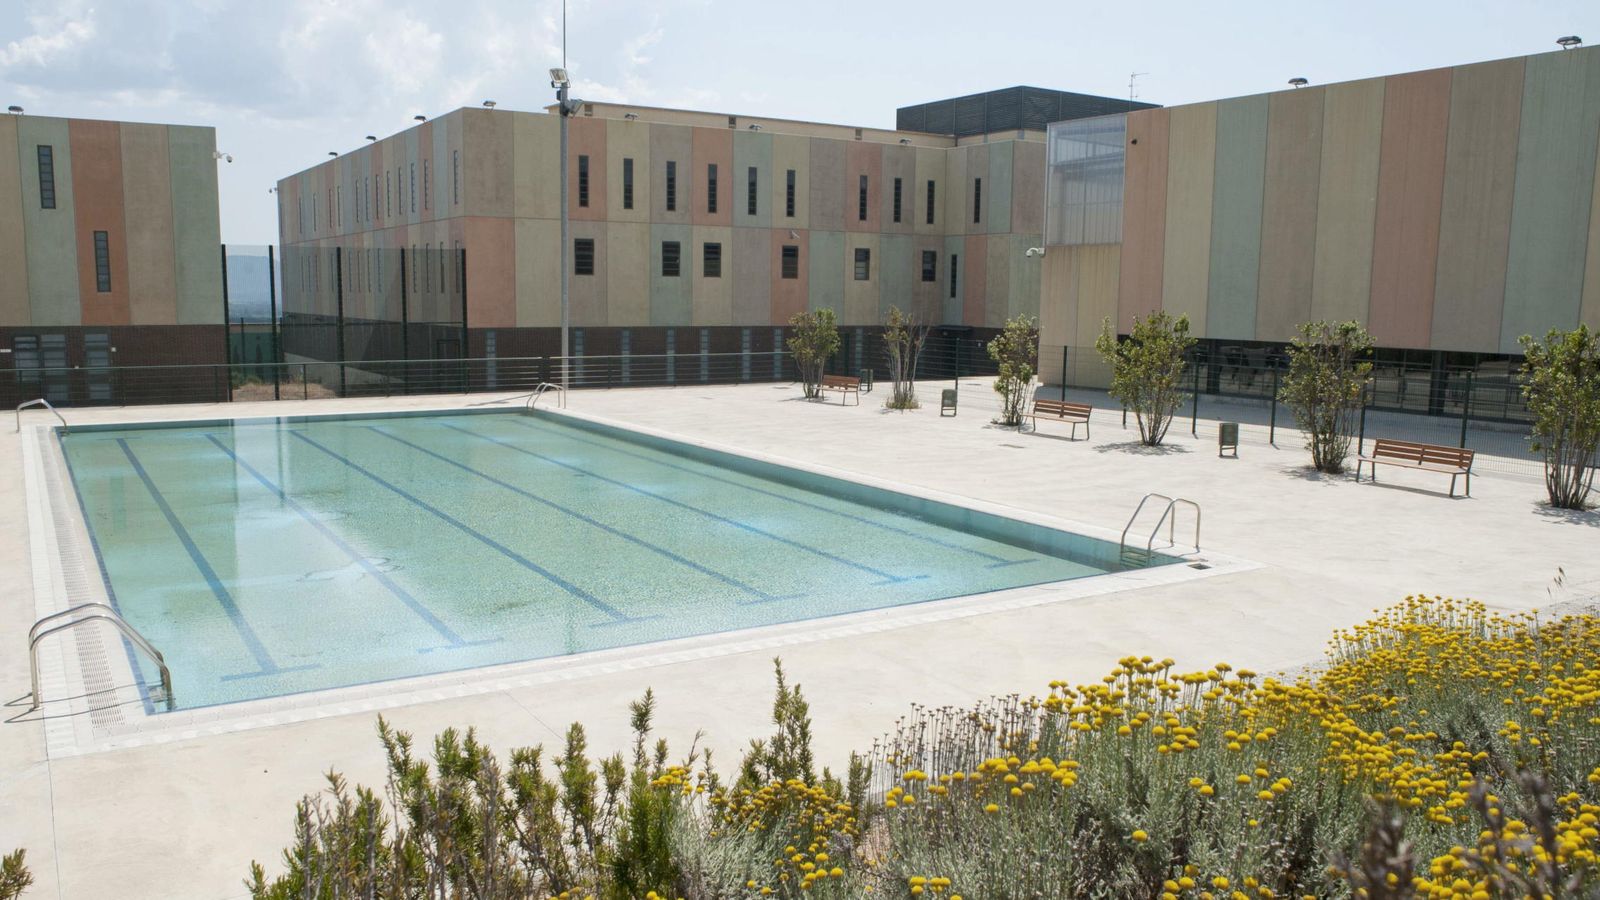 Foto: La piscina del Centro Penitenciario Puig de les Basses de Figueres. (EFE)